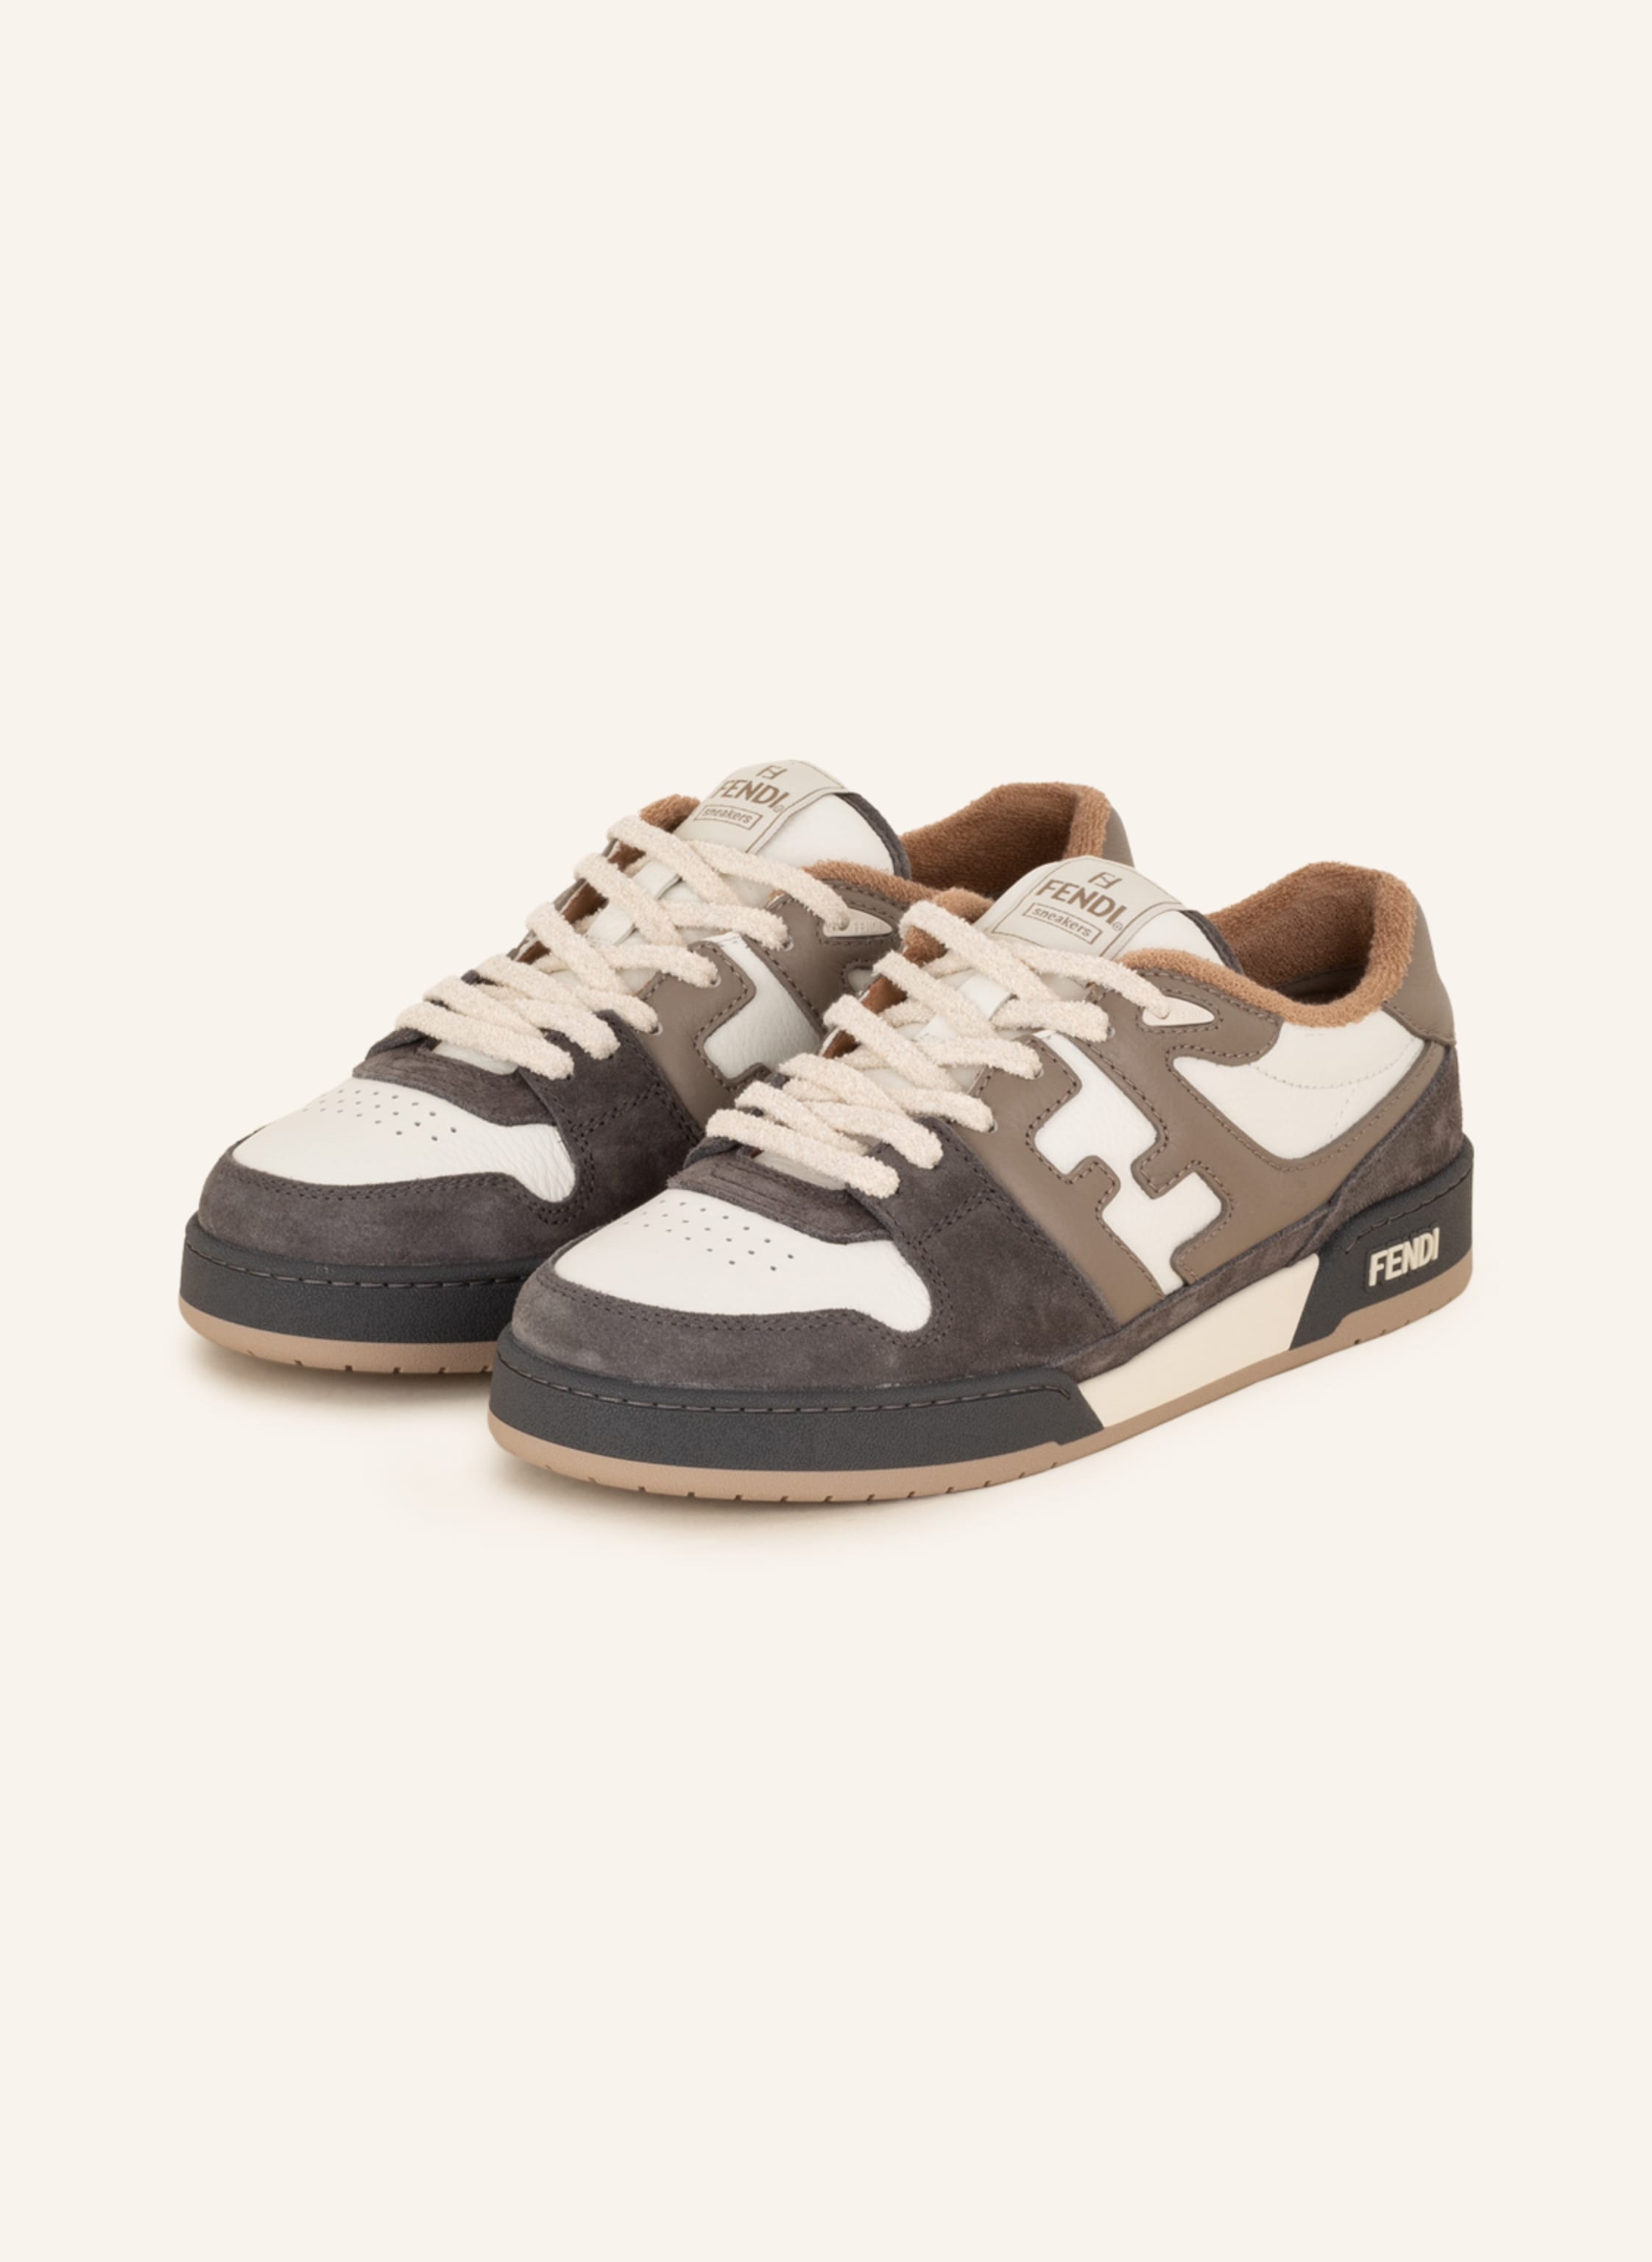 FENDI Sneakers MATCH in dark gray/ white/ taupe | Breuninger